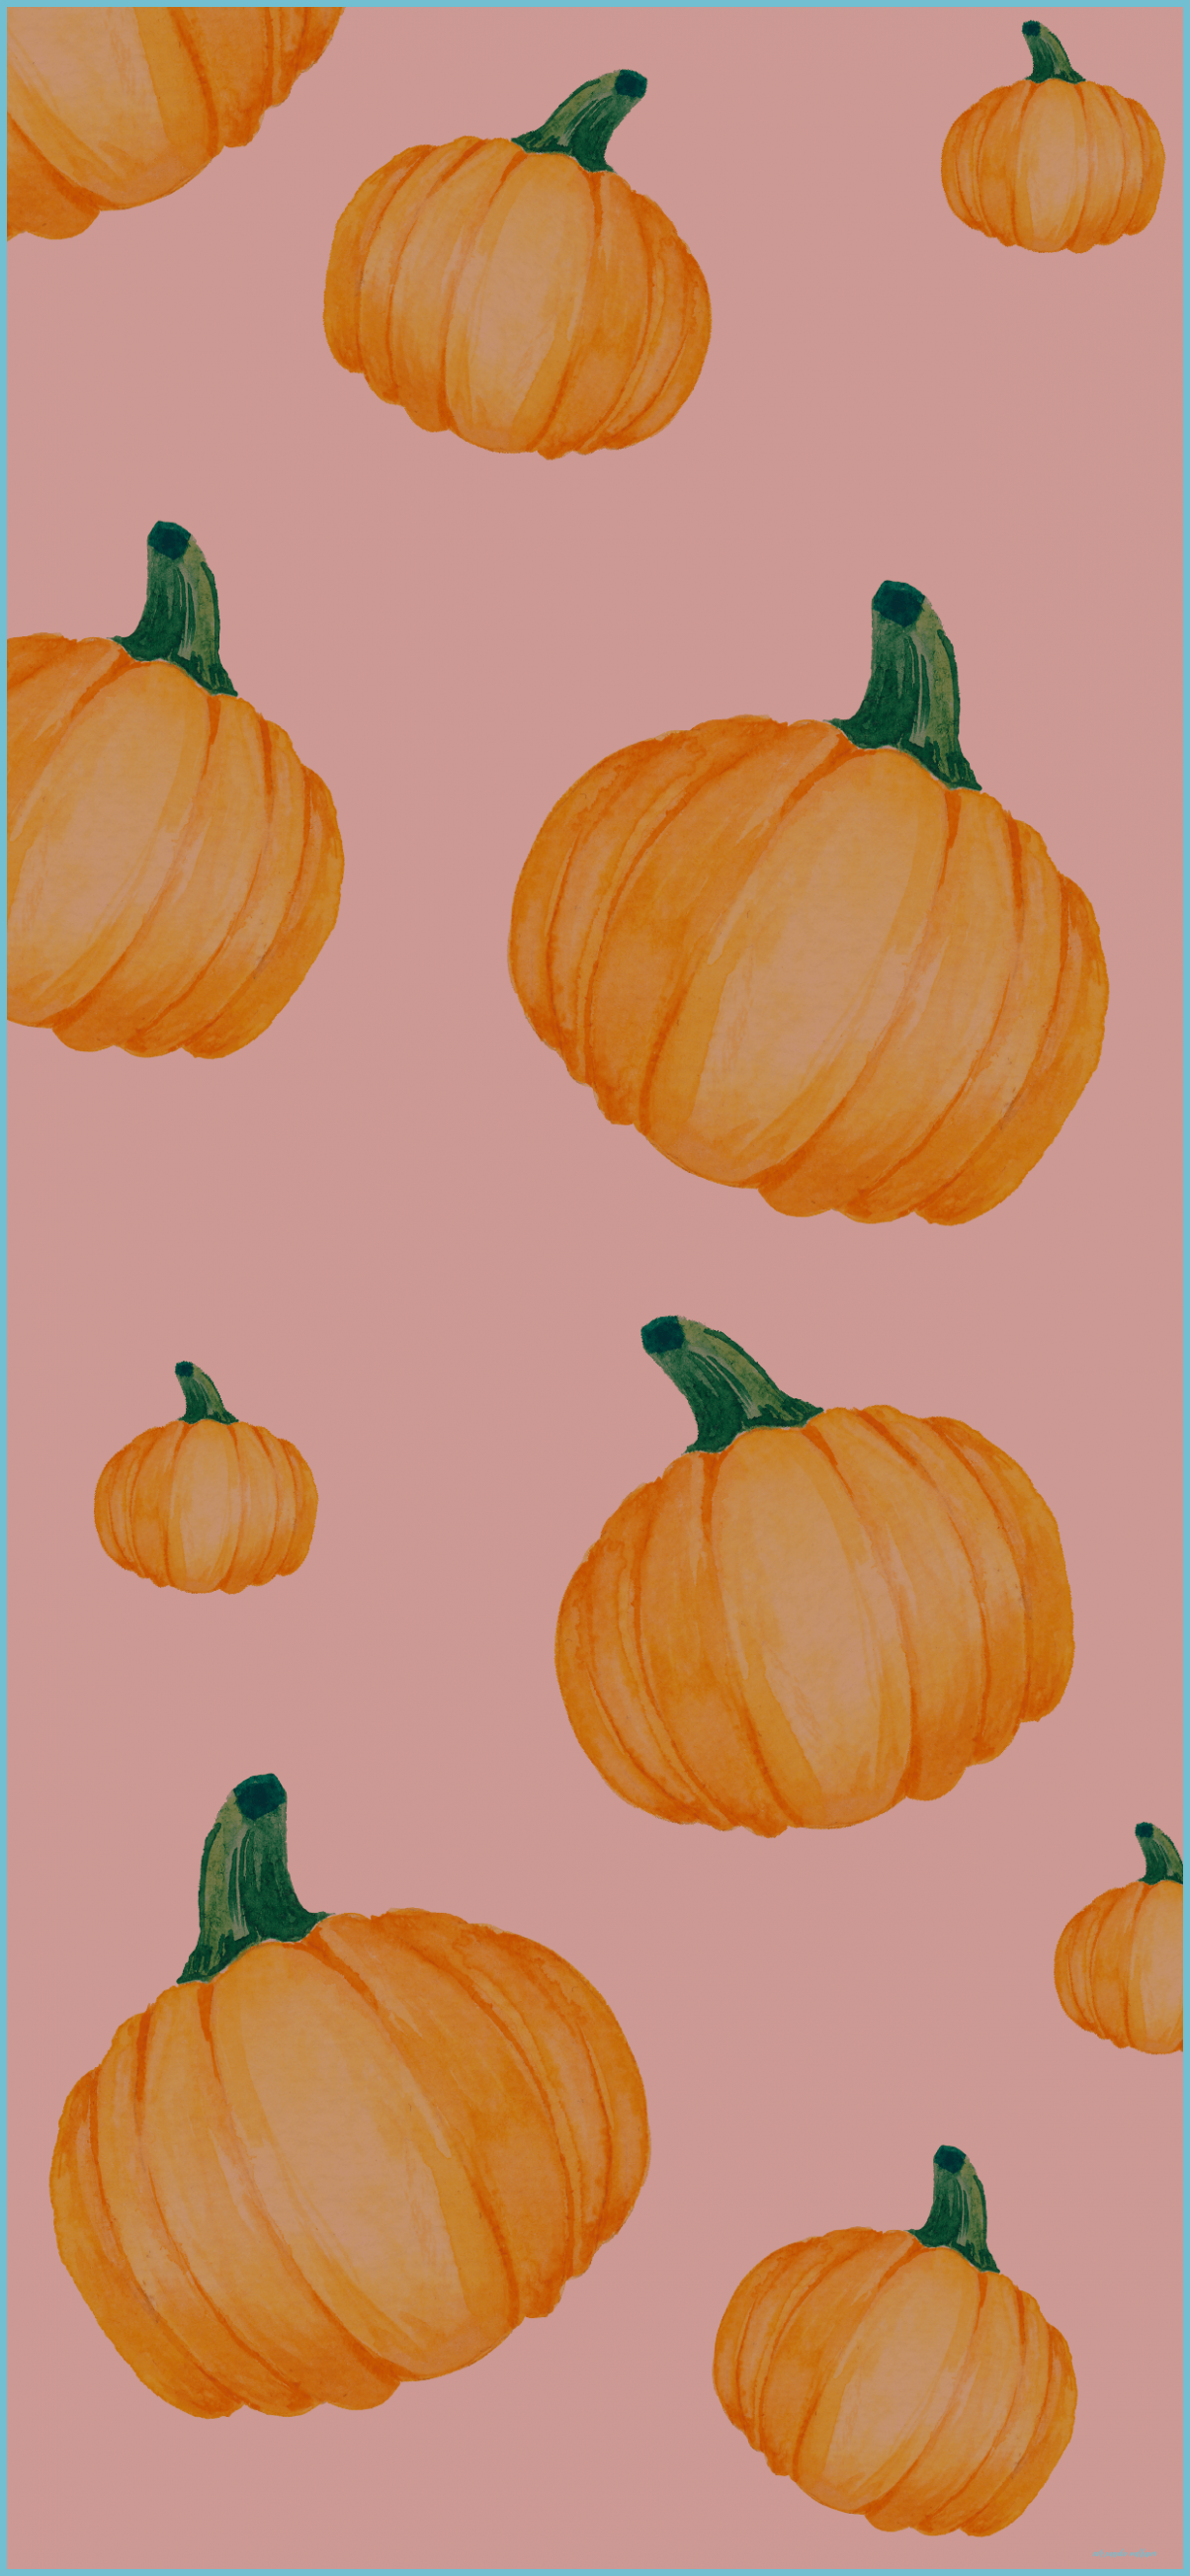 Free Fall IPhone Wallpaper Pumpkins #falliphonewallpaper The Pumpkin Wallpaper